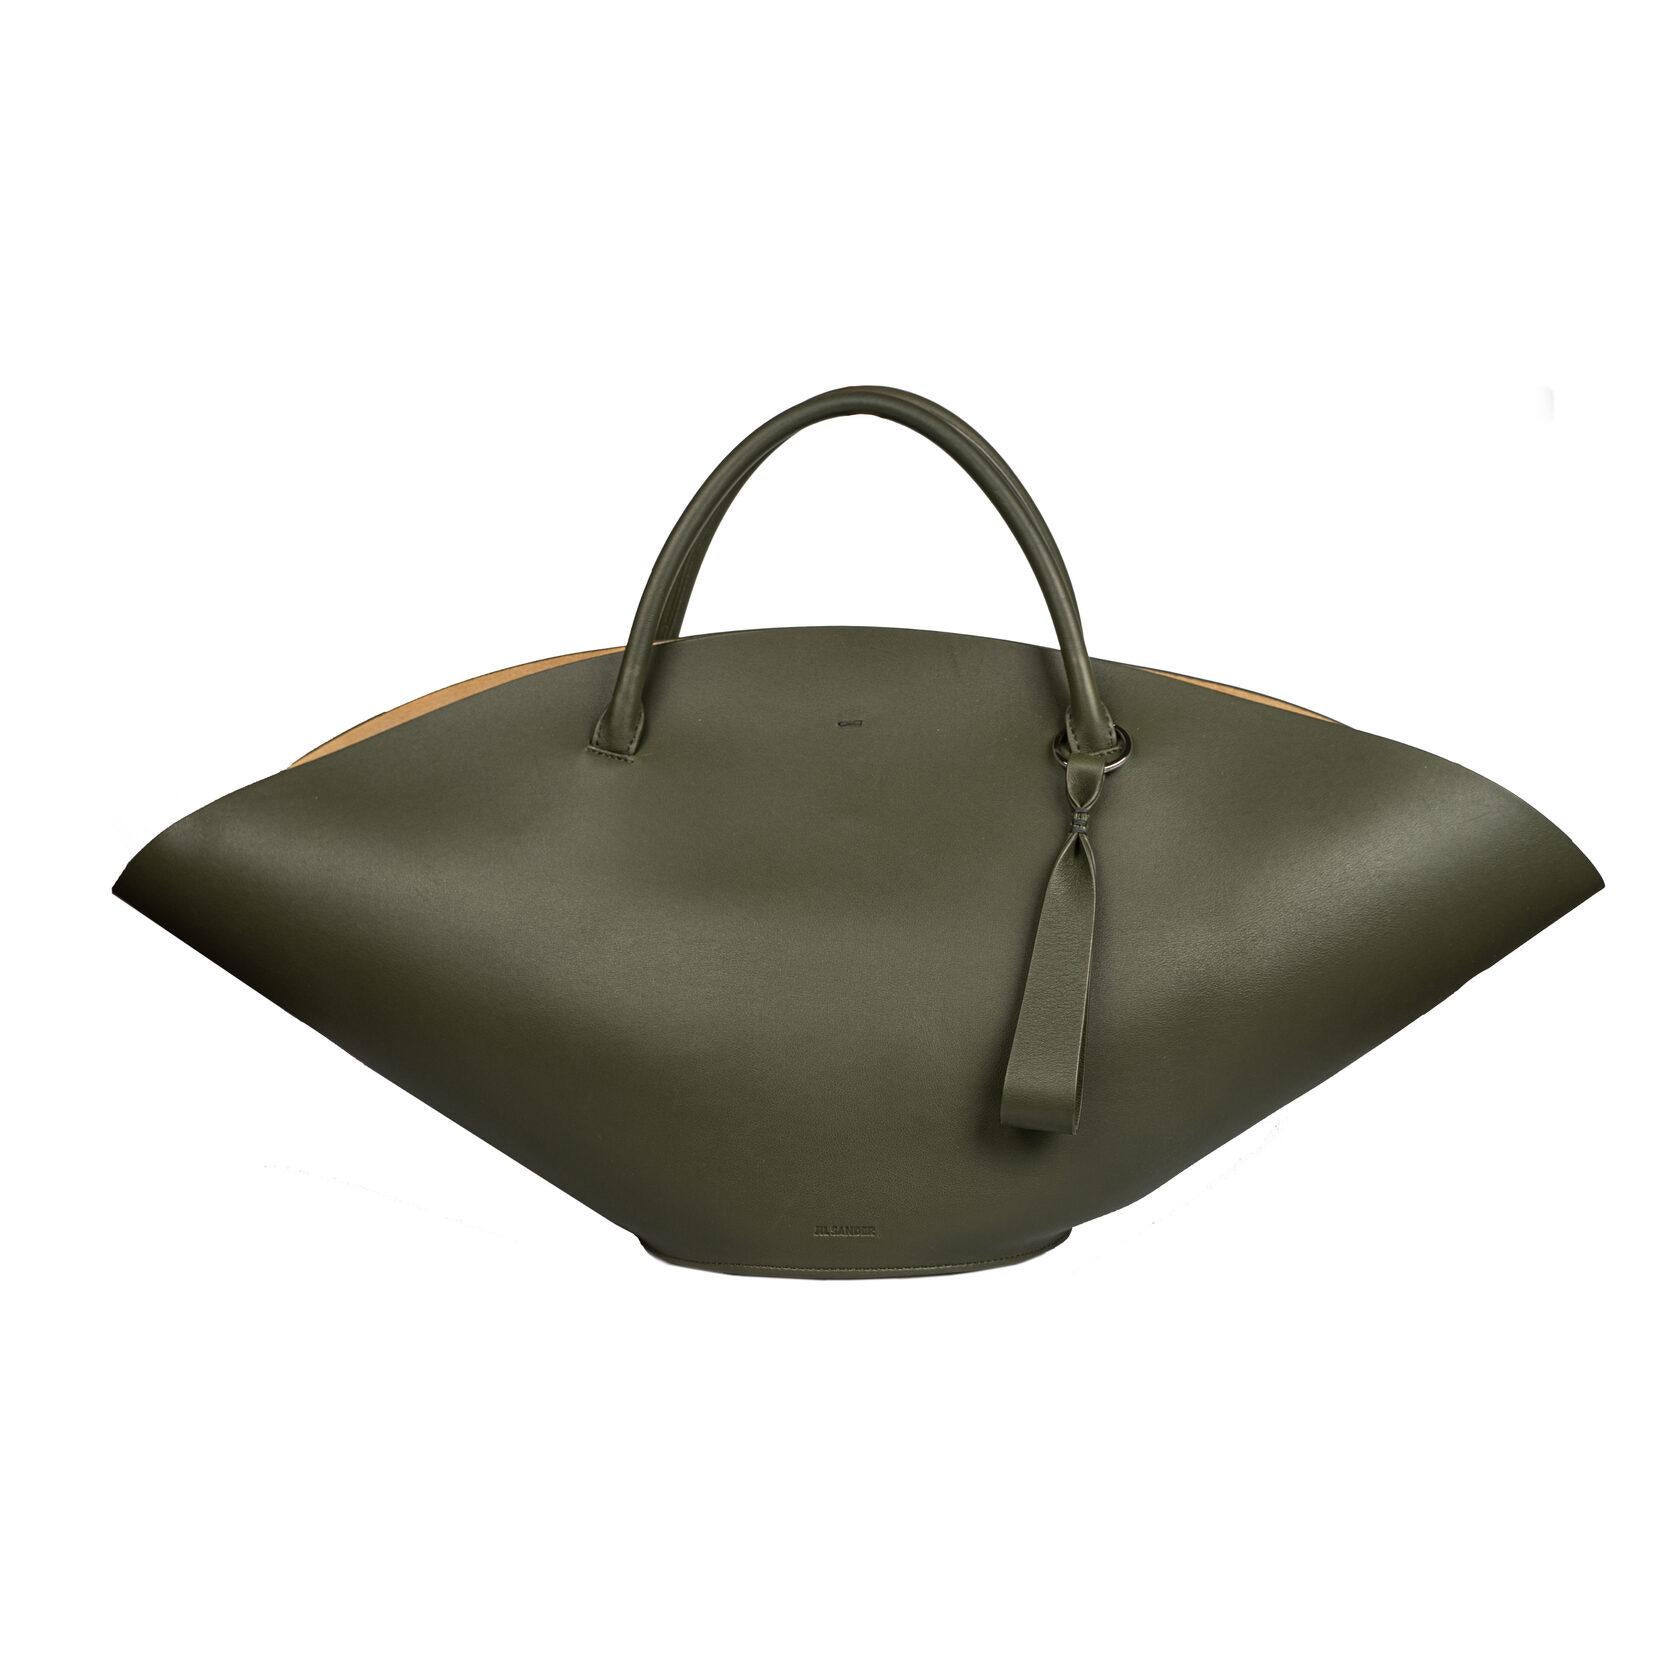 CONDITION: NW: New
SET: Bag, Shoulder strap
SIZE: 63/28/19 cm; Handles 40 cm, Shoulder strap 102 cm.
Khaki
Leather material
INSIDE COLOR: Brown
INSIDE MATERIAL: Suede
HARDWARE: Gold-tone metal